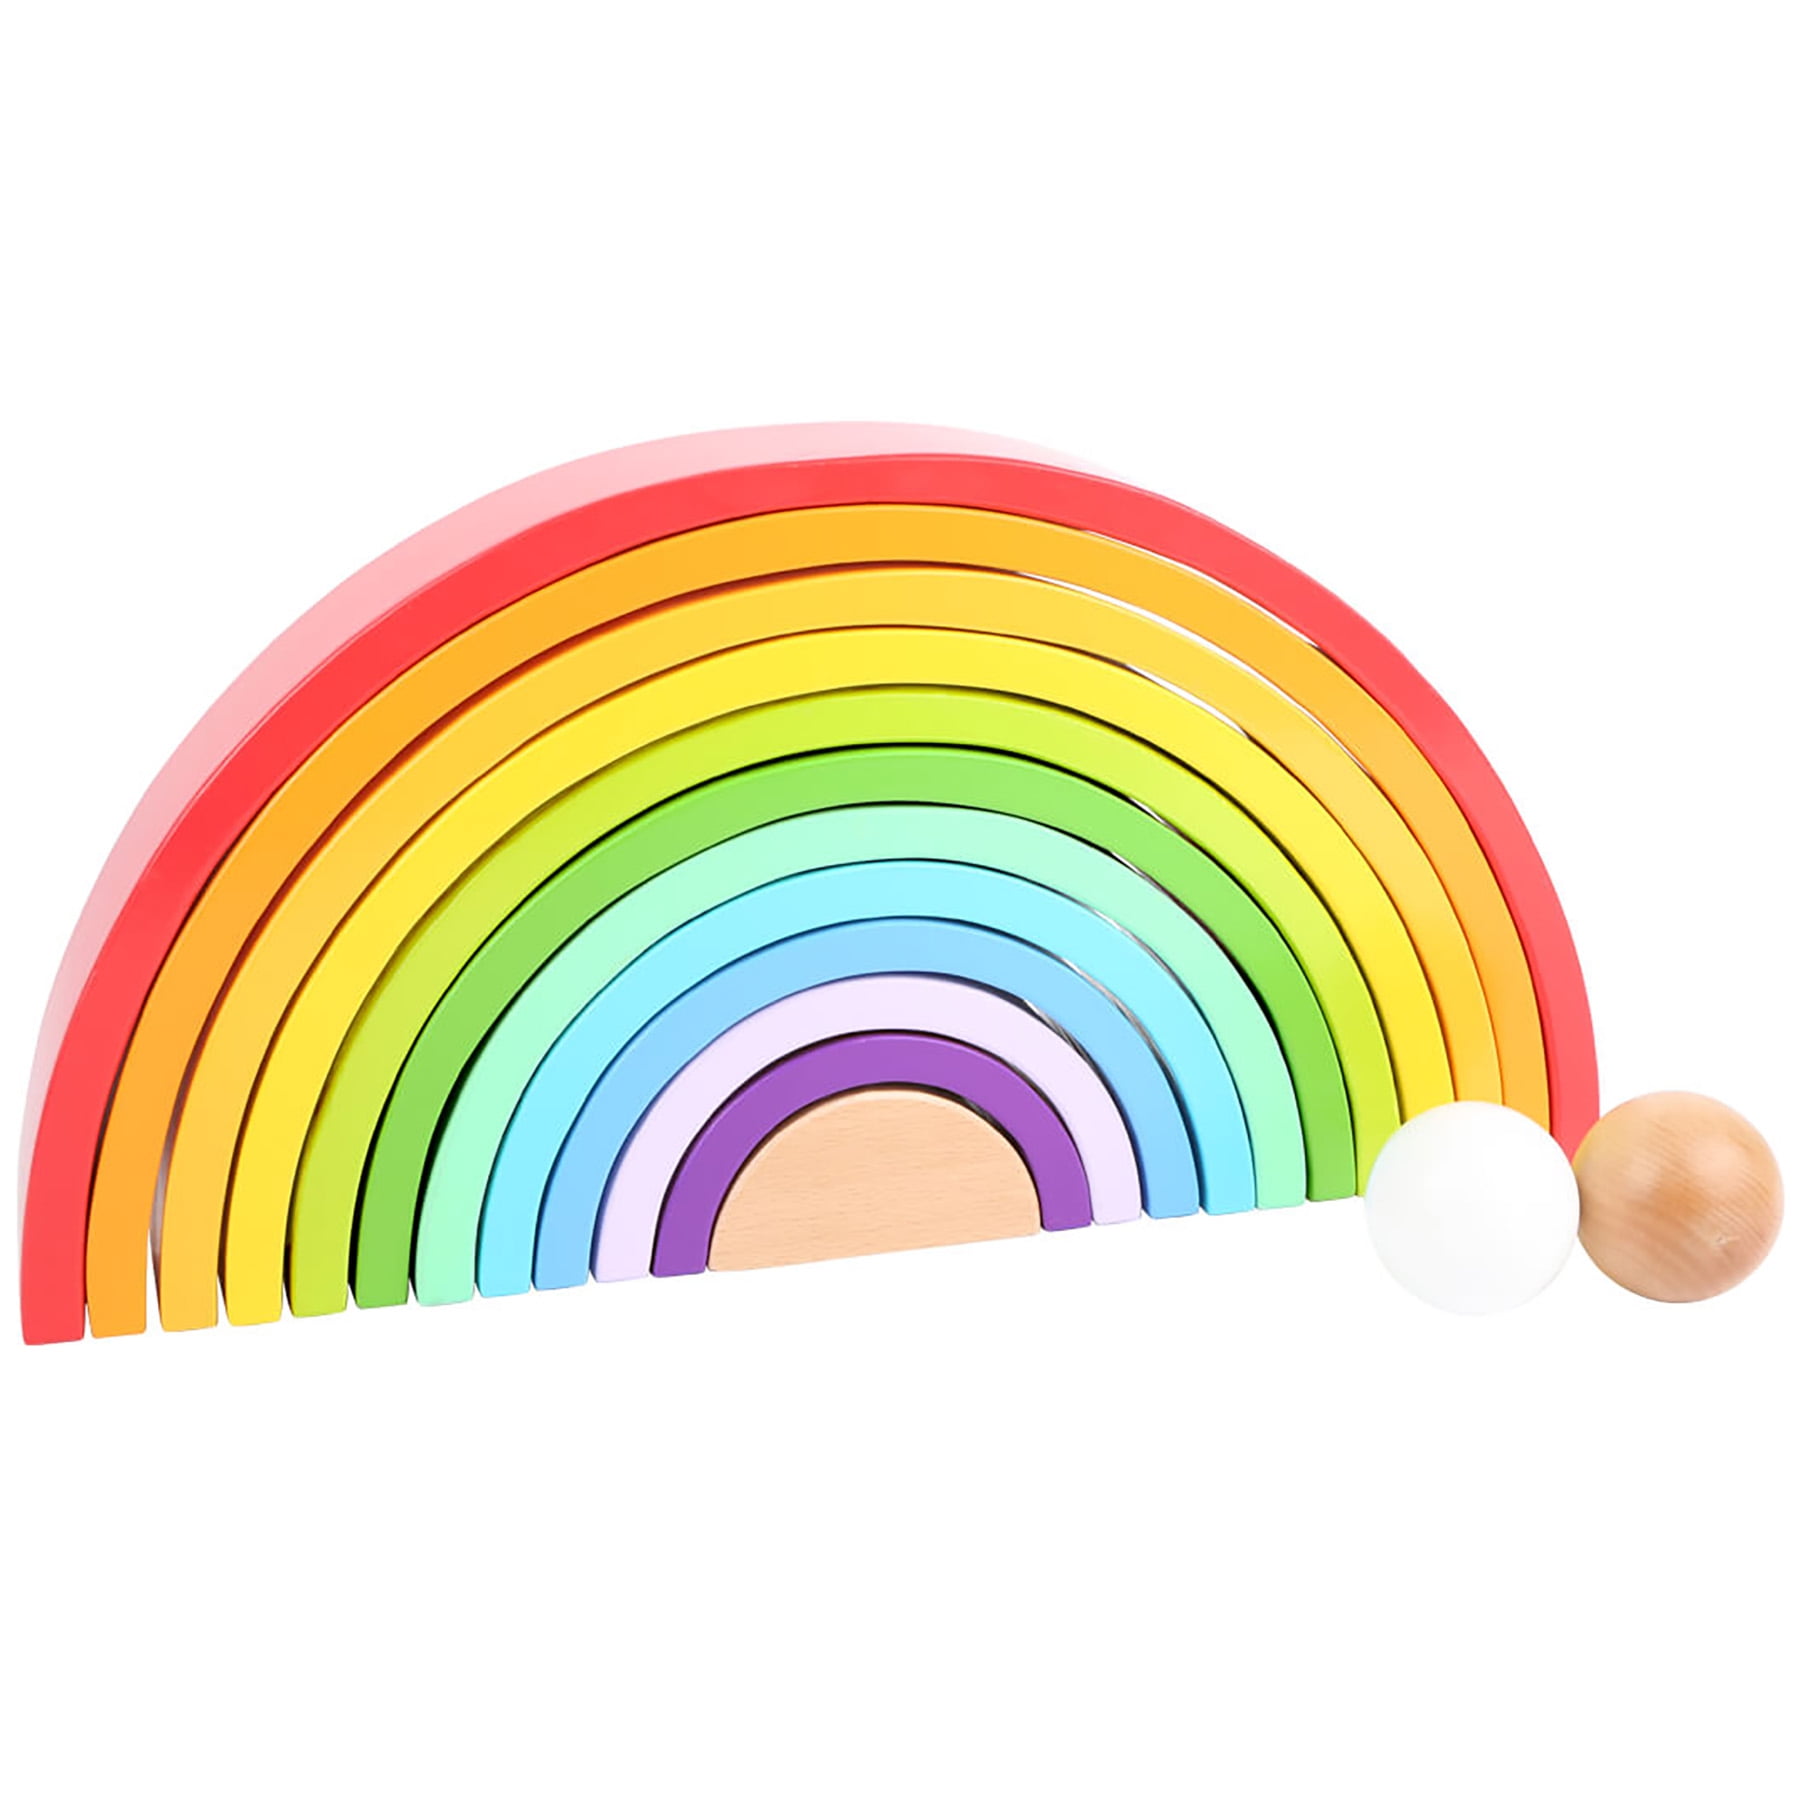 Wooden Playdough Tool Set — Rainbow Playsets